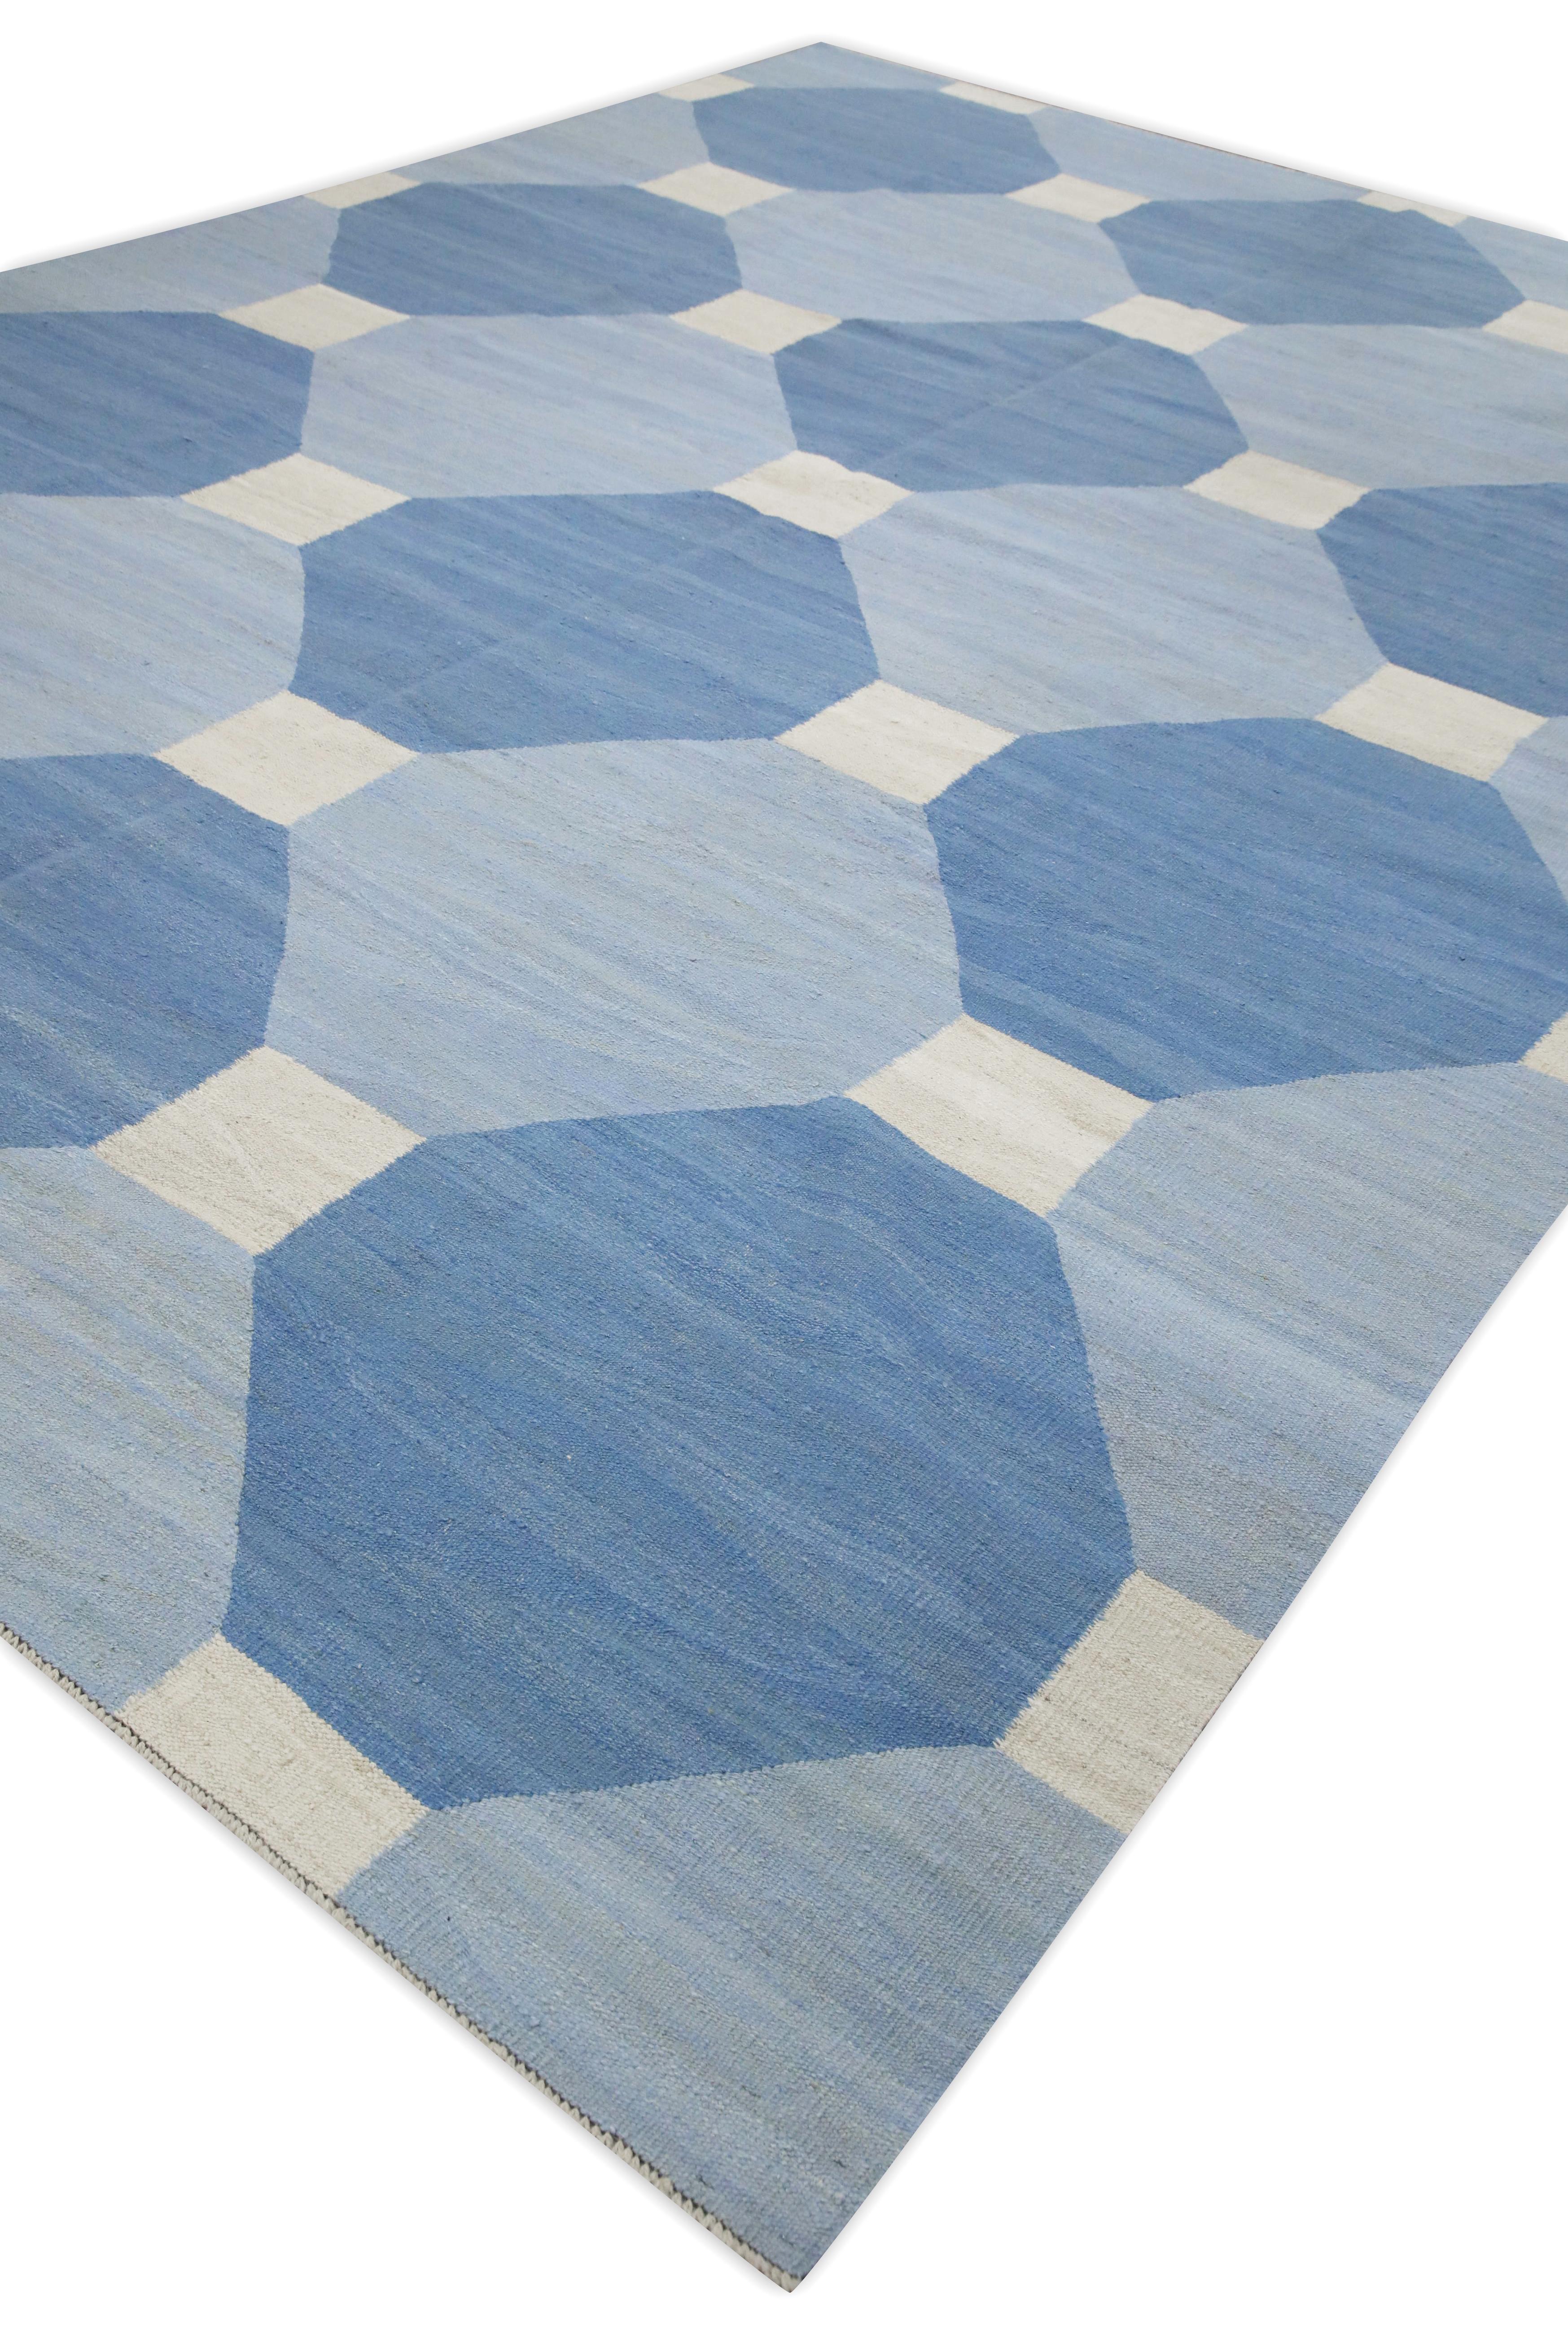 Vegetable Dyed Blue Geometric Design Modern Flatweave Handmade Wool Rug 9' X 12'7